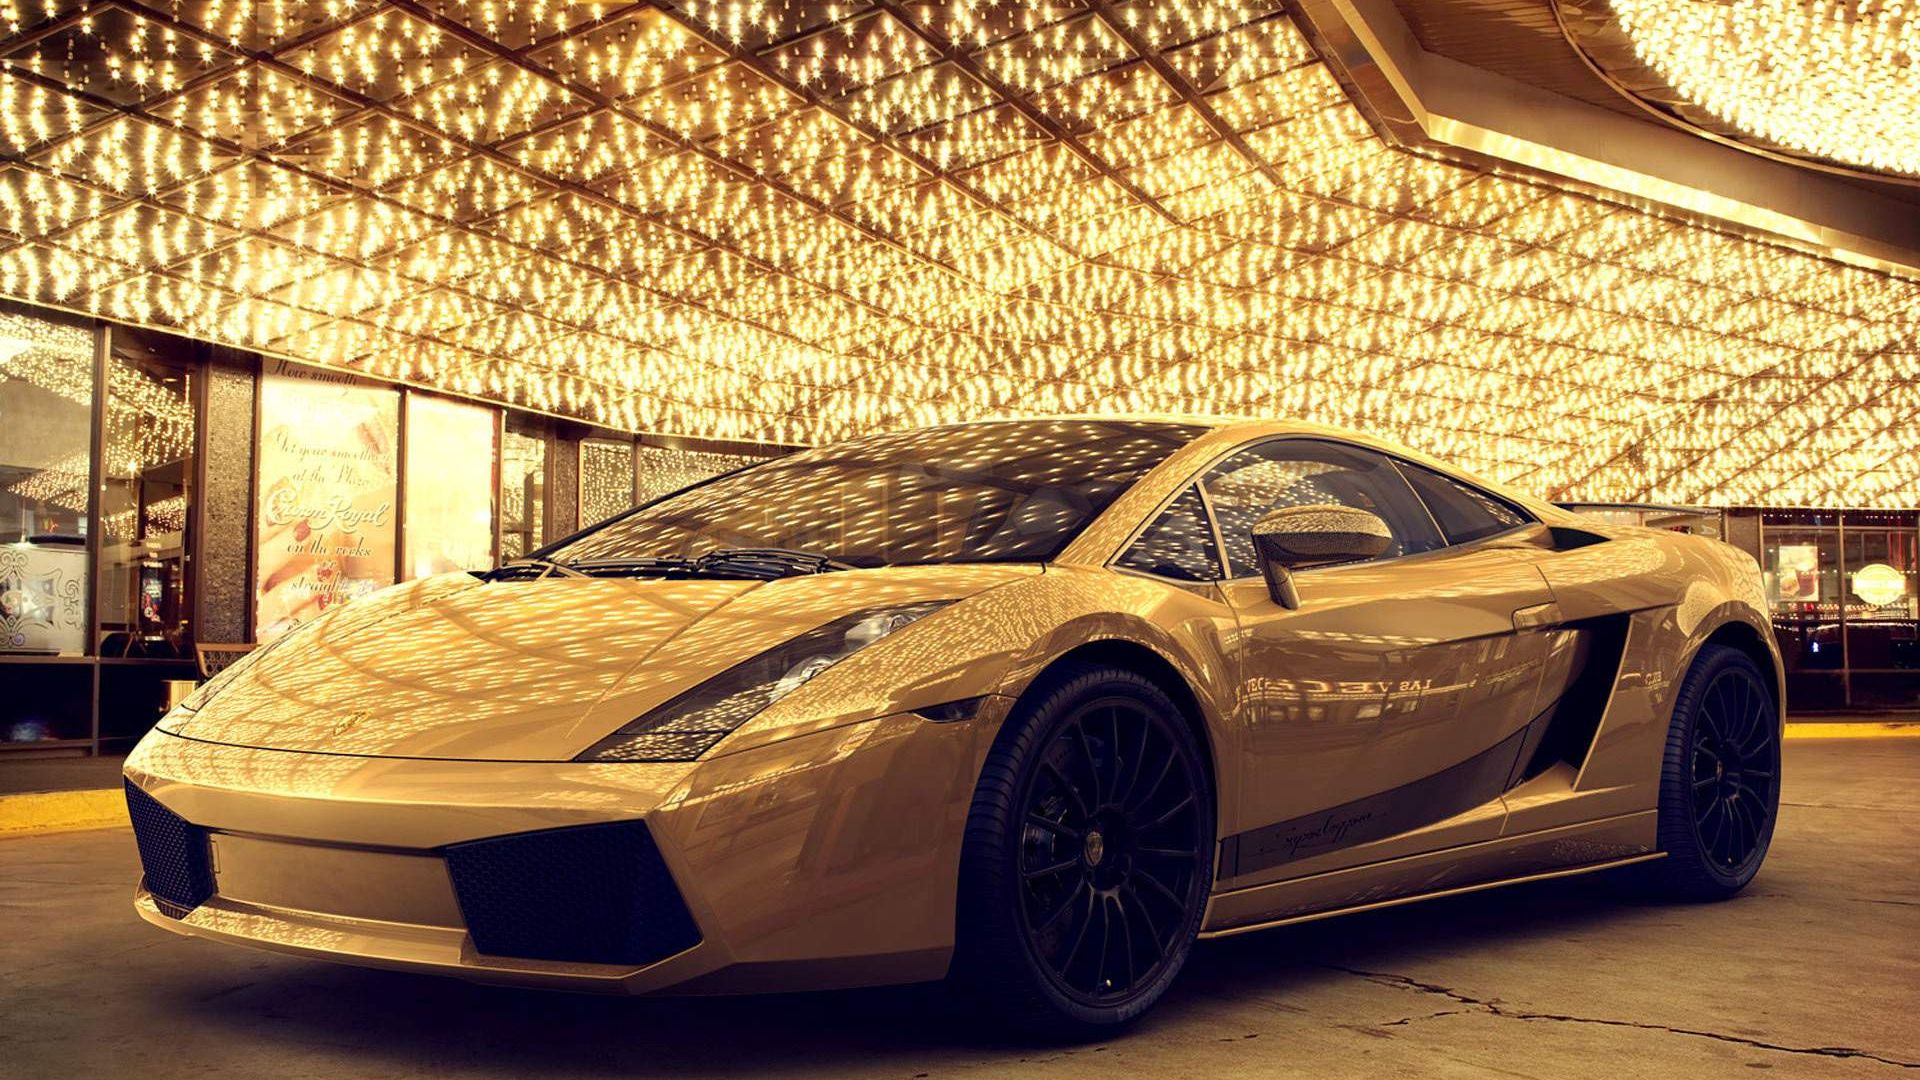 Desktop Wallpaper Gold Lamborghini Car, Hd Image, Picture, Background, Z  Eznf